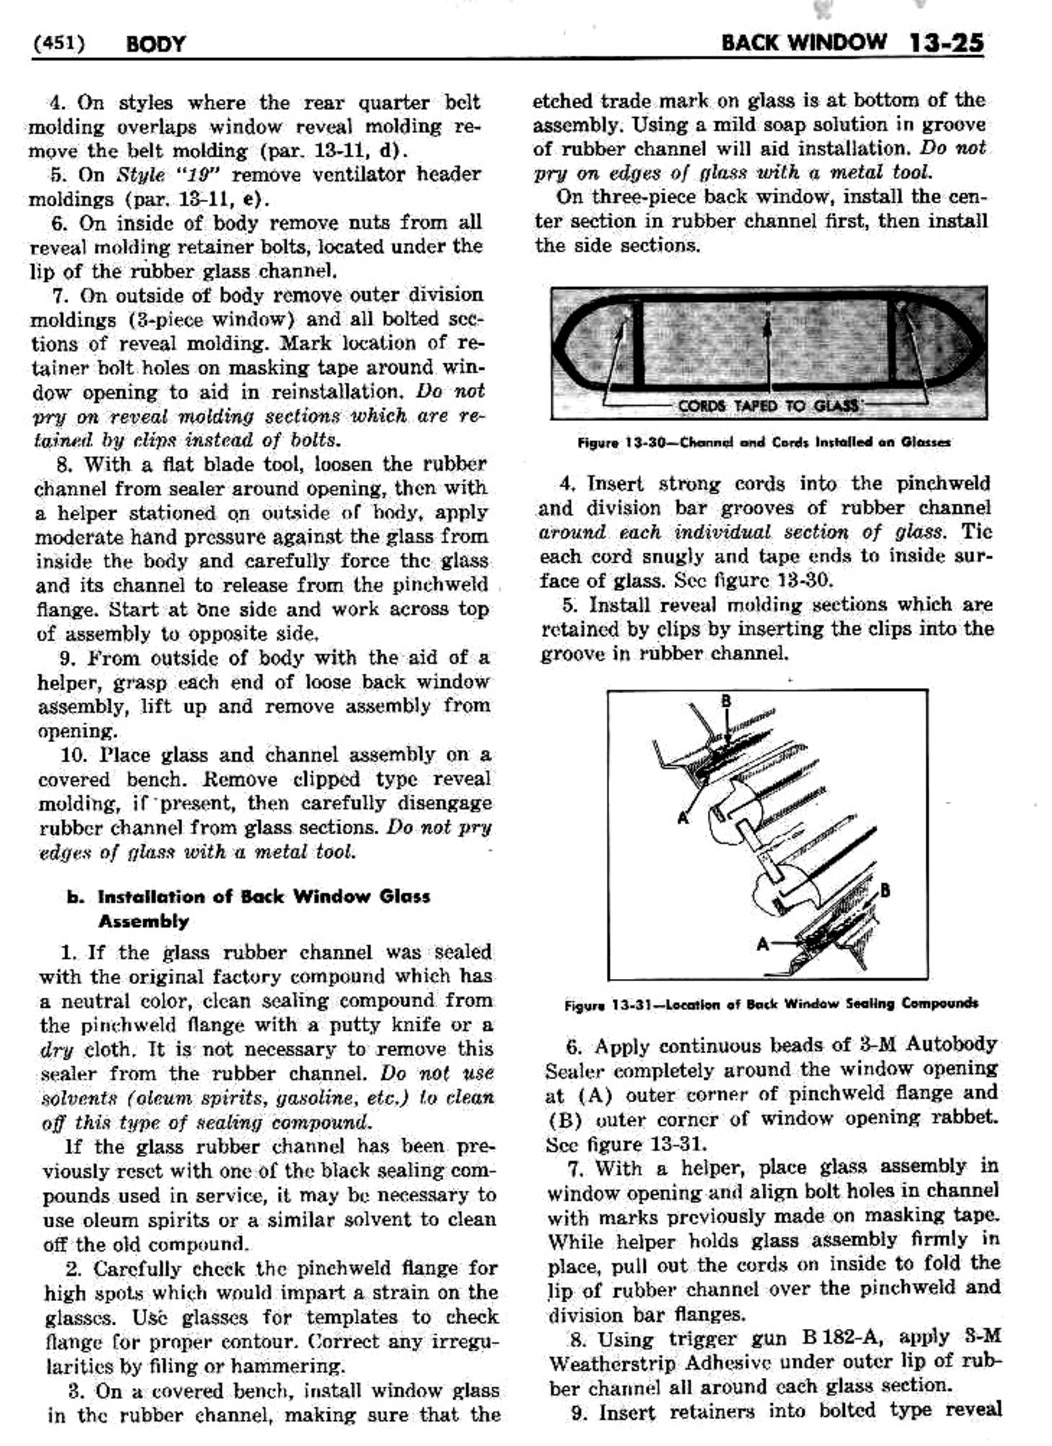 n_14 1951 Buick Shop Manual - Body-025-025.jpg